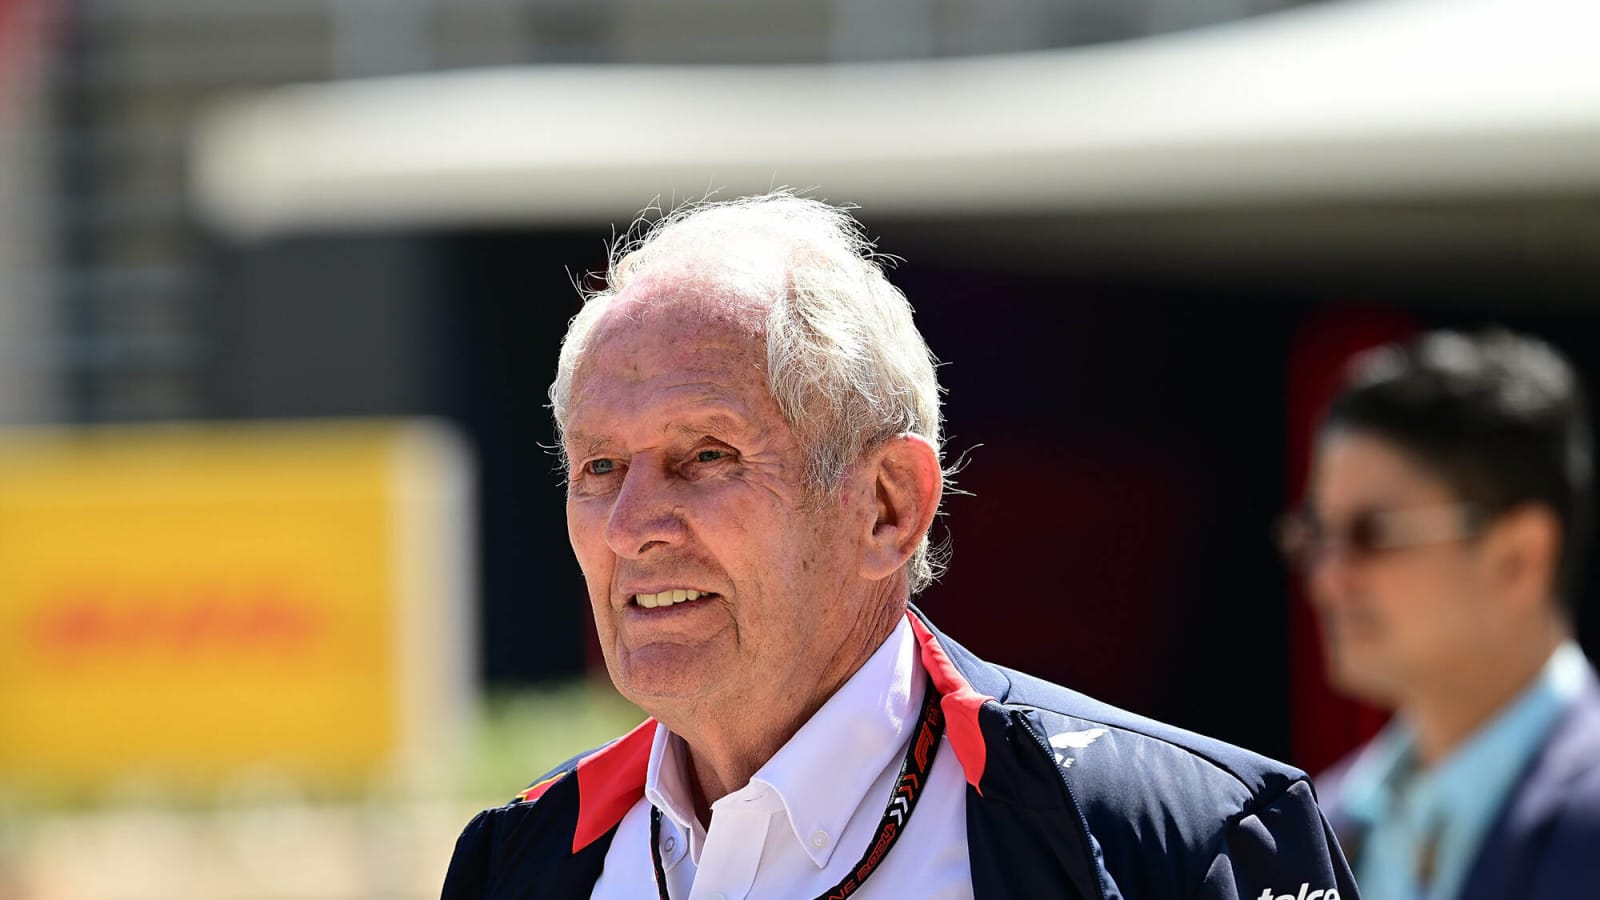 Helmut Marko breaks silence on 'nonsense' rumors of Liam Lawson replacing Daniel Ricciardo at RB